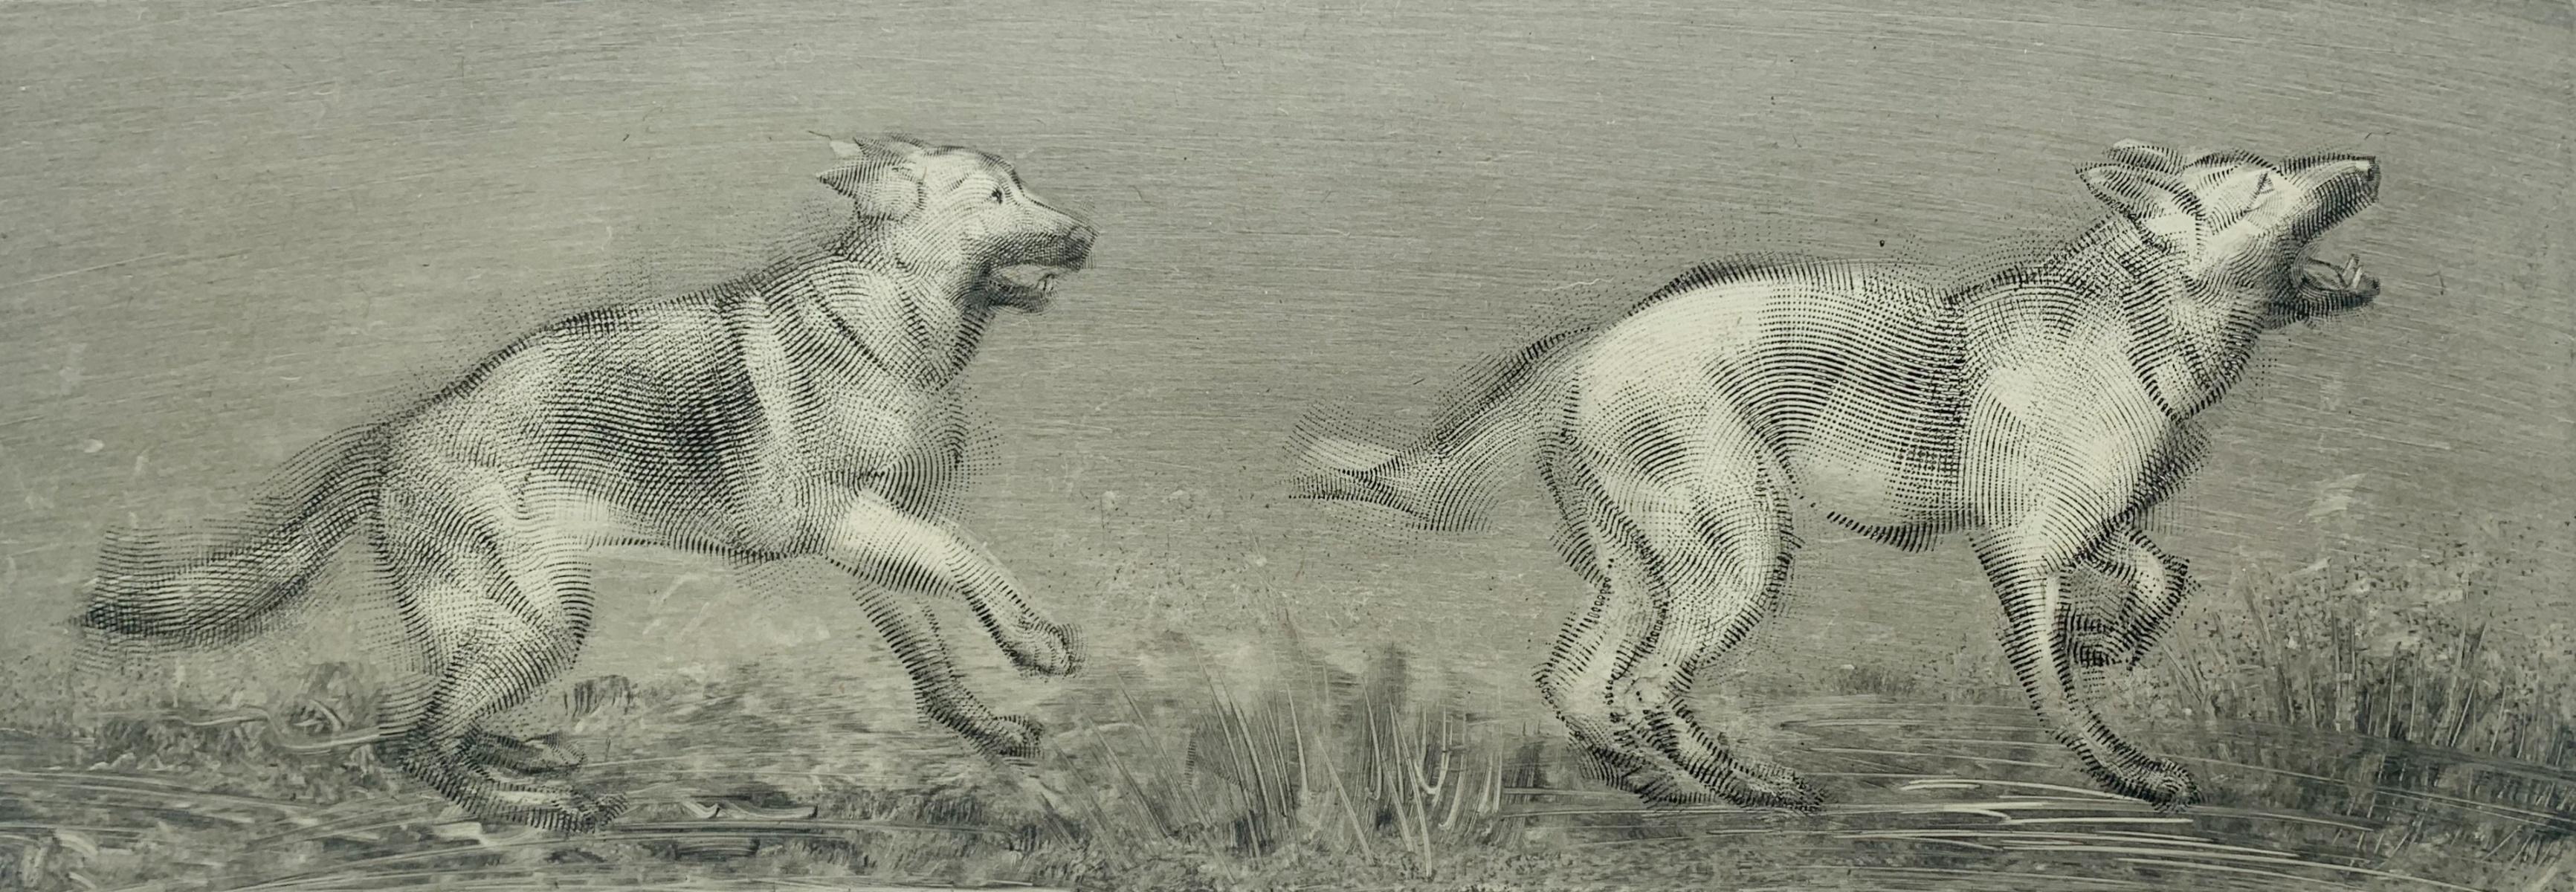 Pawel Zablocki Animal Print - Tofcia II and Tofcia III. Contemporary Figurative Etching Print, Animals, Dogs